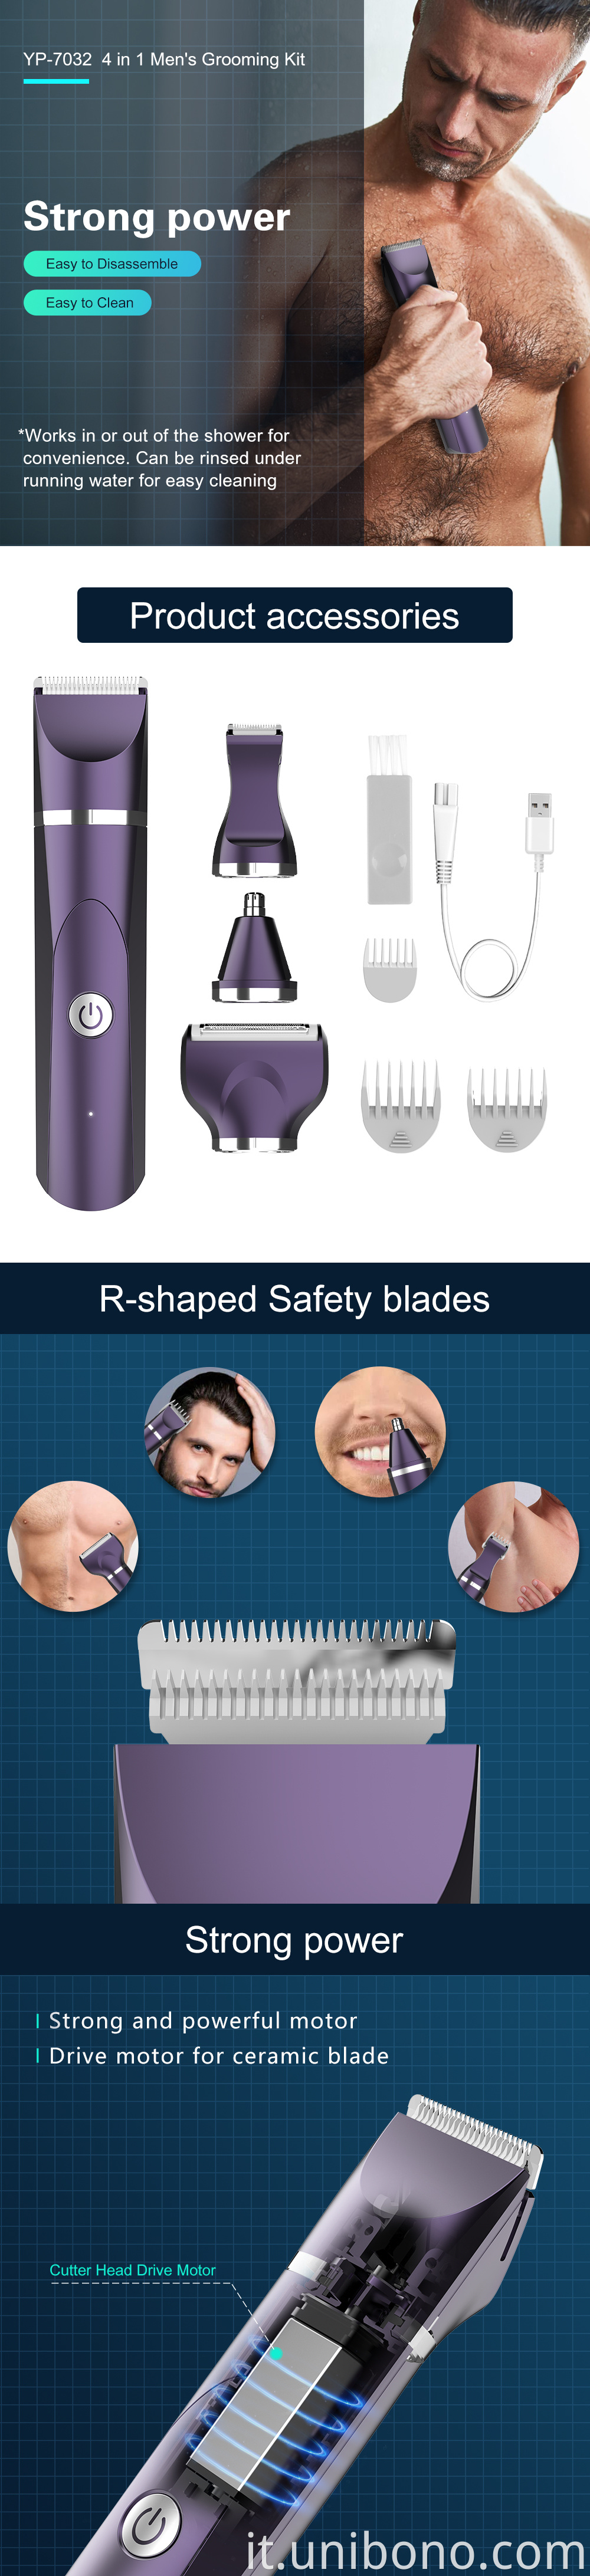 Electric Body Hair Trimmer Grooming kit for Men